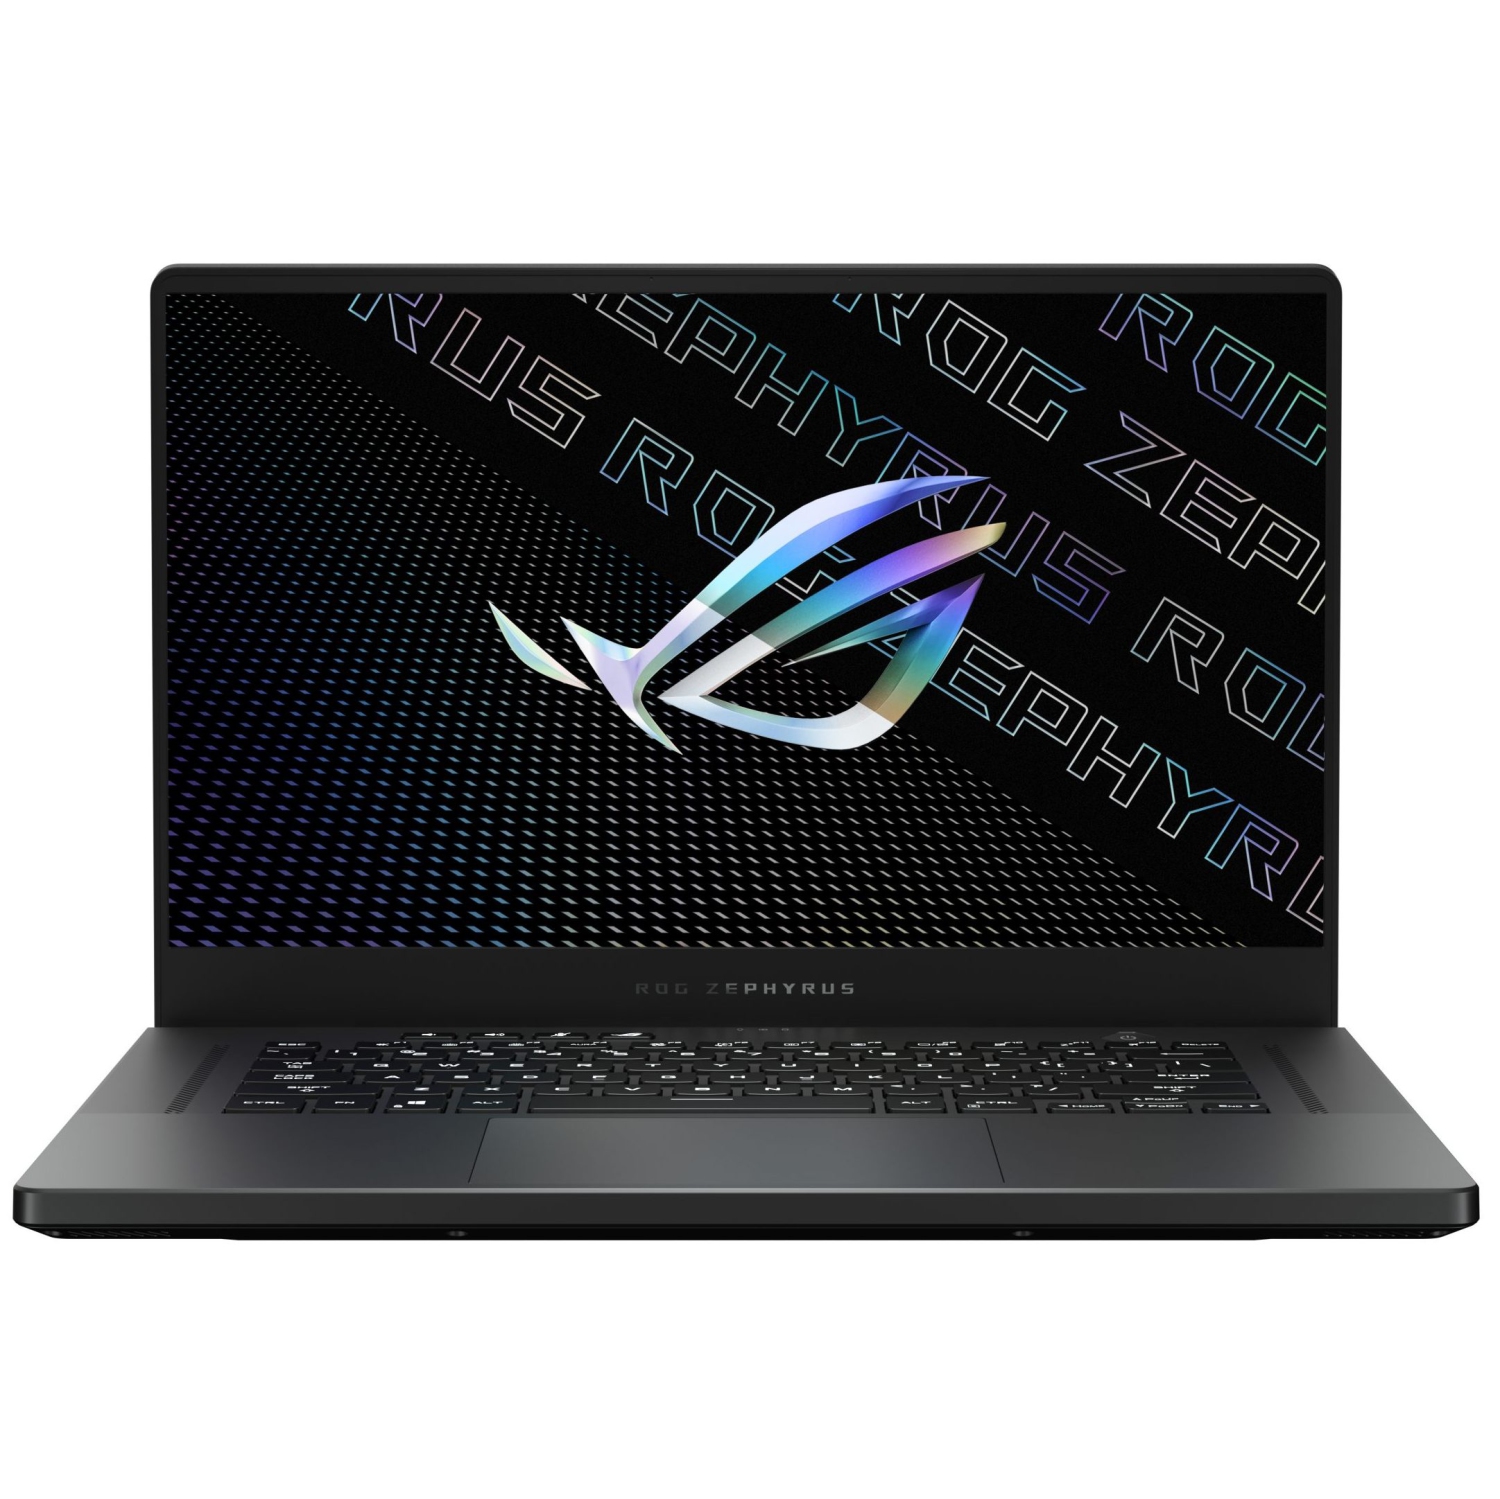 Custom ASUS ROG Zephyrus G15 Laptop (AMD Ryzen 9 5900HS, 24GB RAM, 2TB m.2 SATA SSD, NVIDIA RTX 3070, Win 10 Pro)